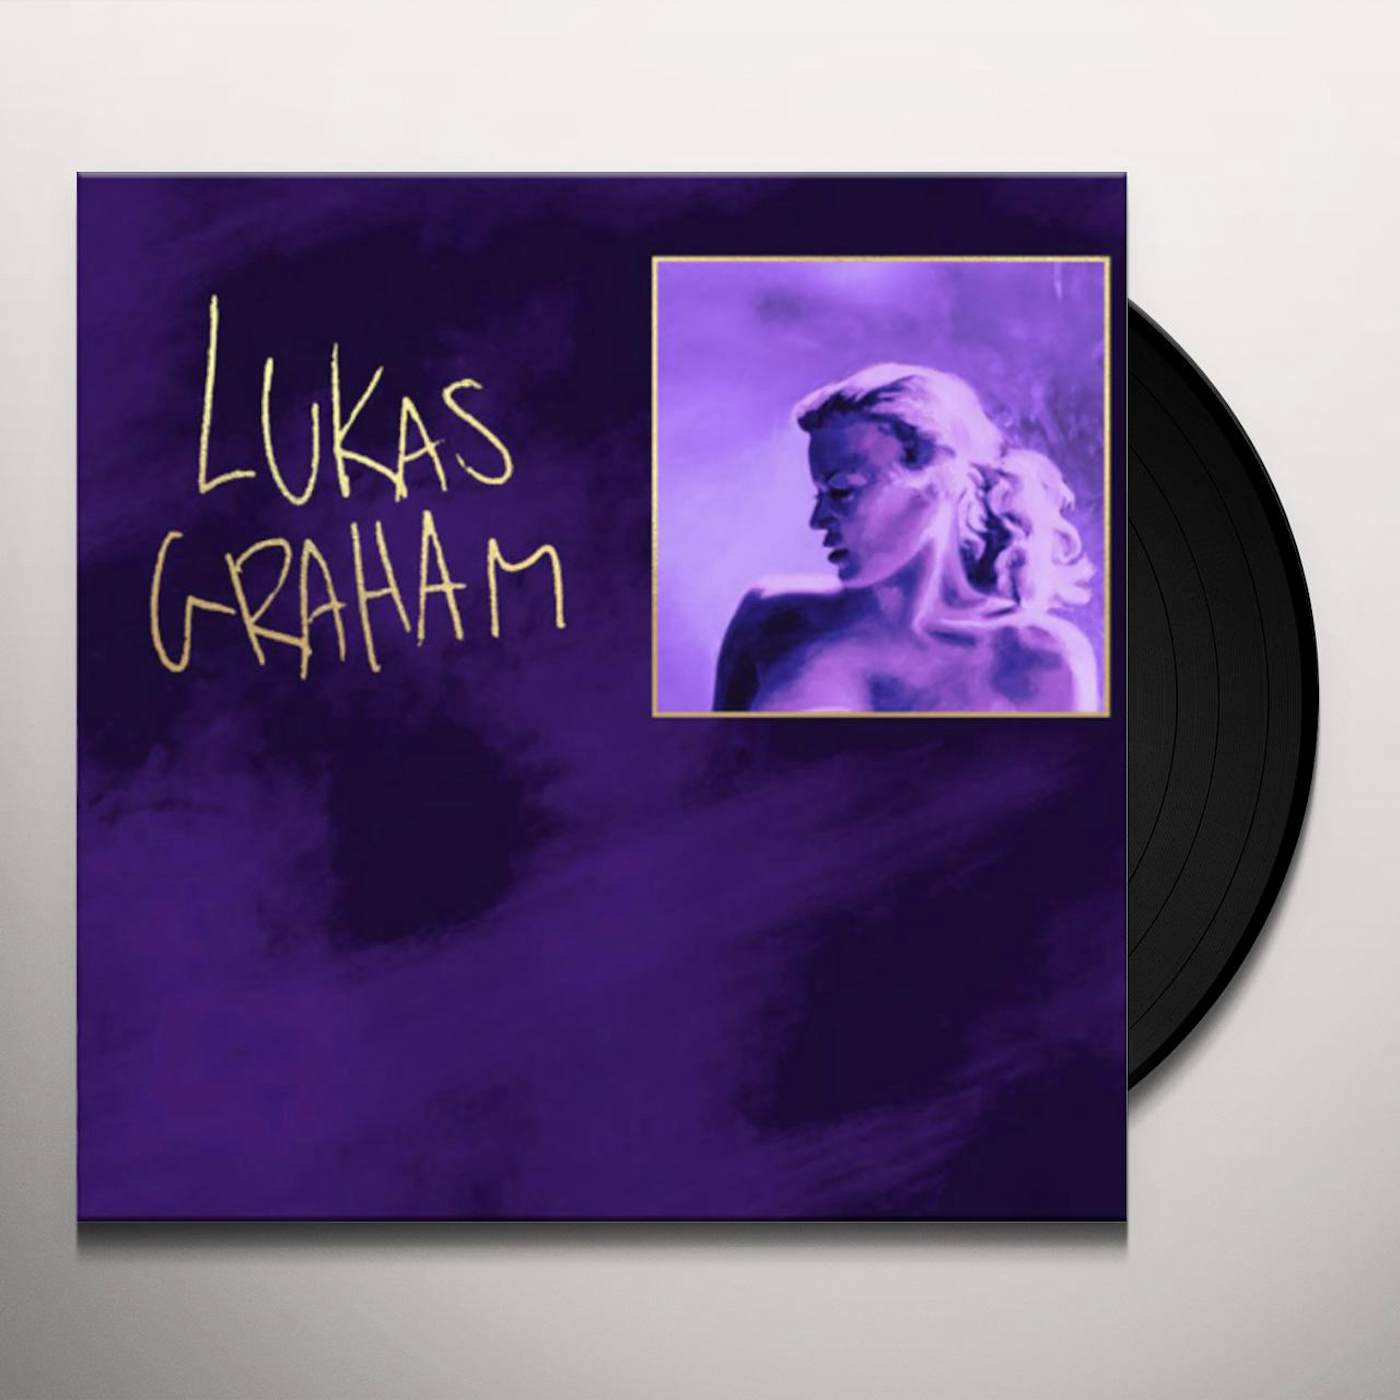 Mig selv Seminary dato Lukas Graham 3 (The Purple Album) Vinyl Record